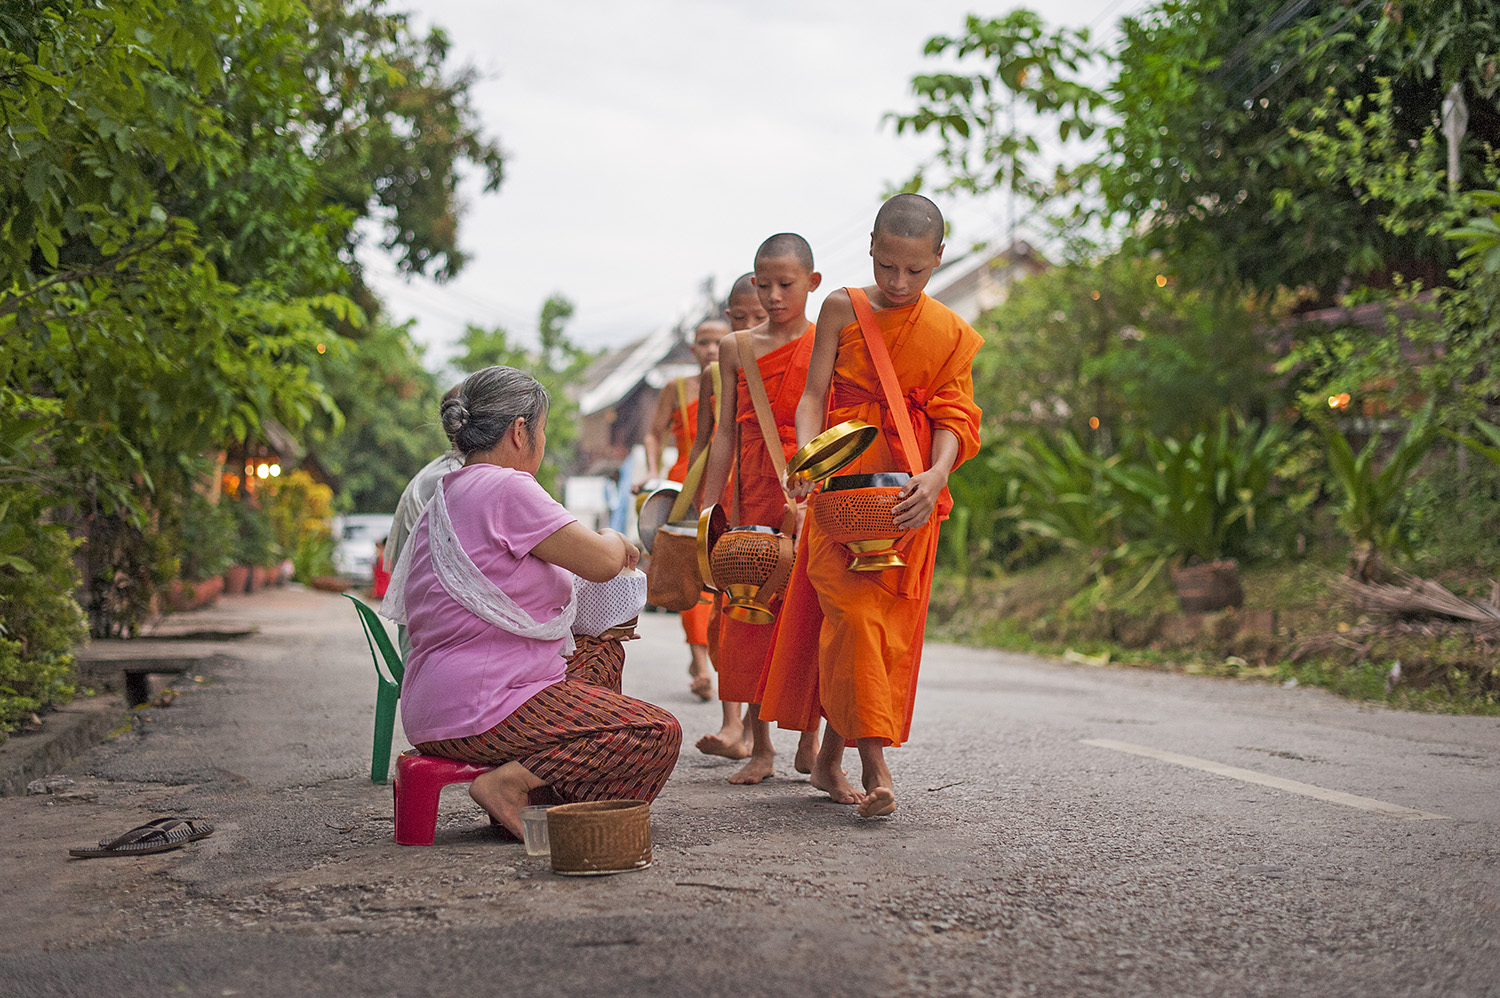 Travel images, Laos